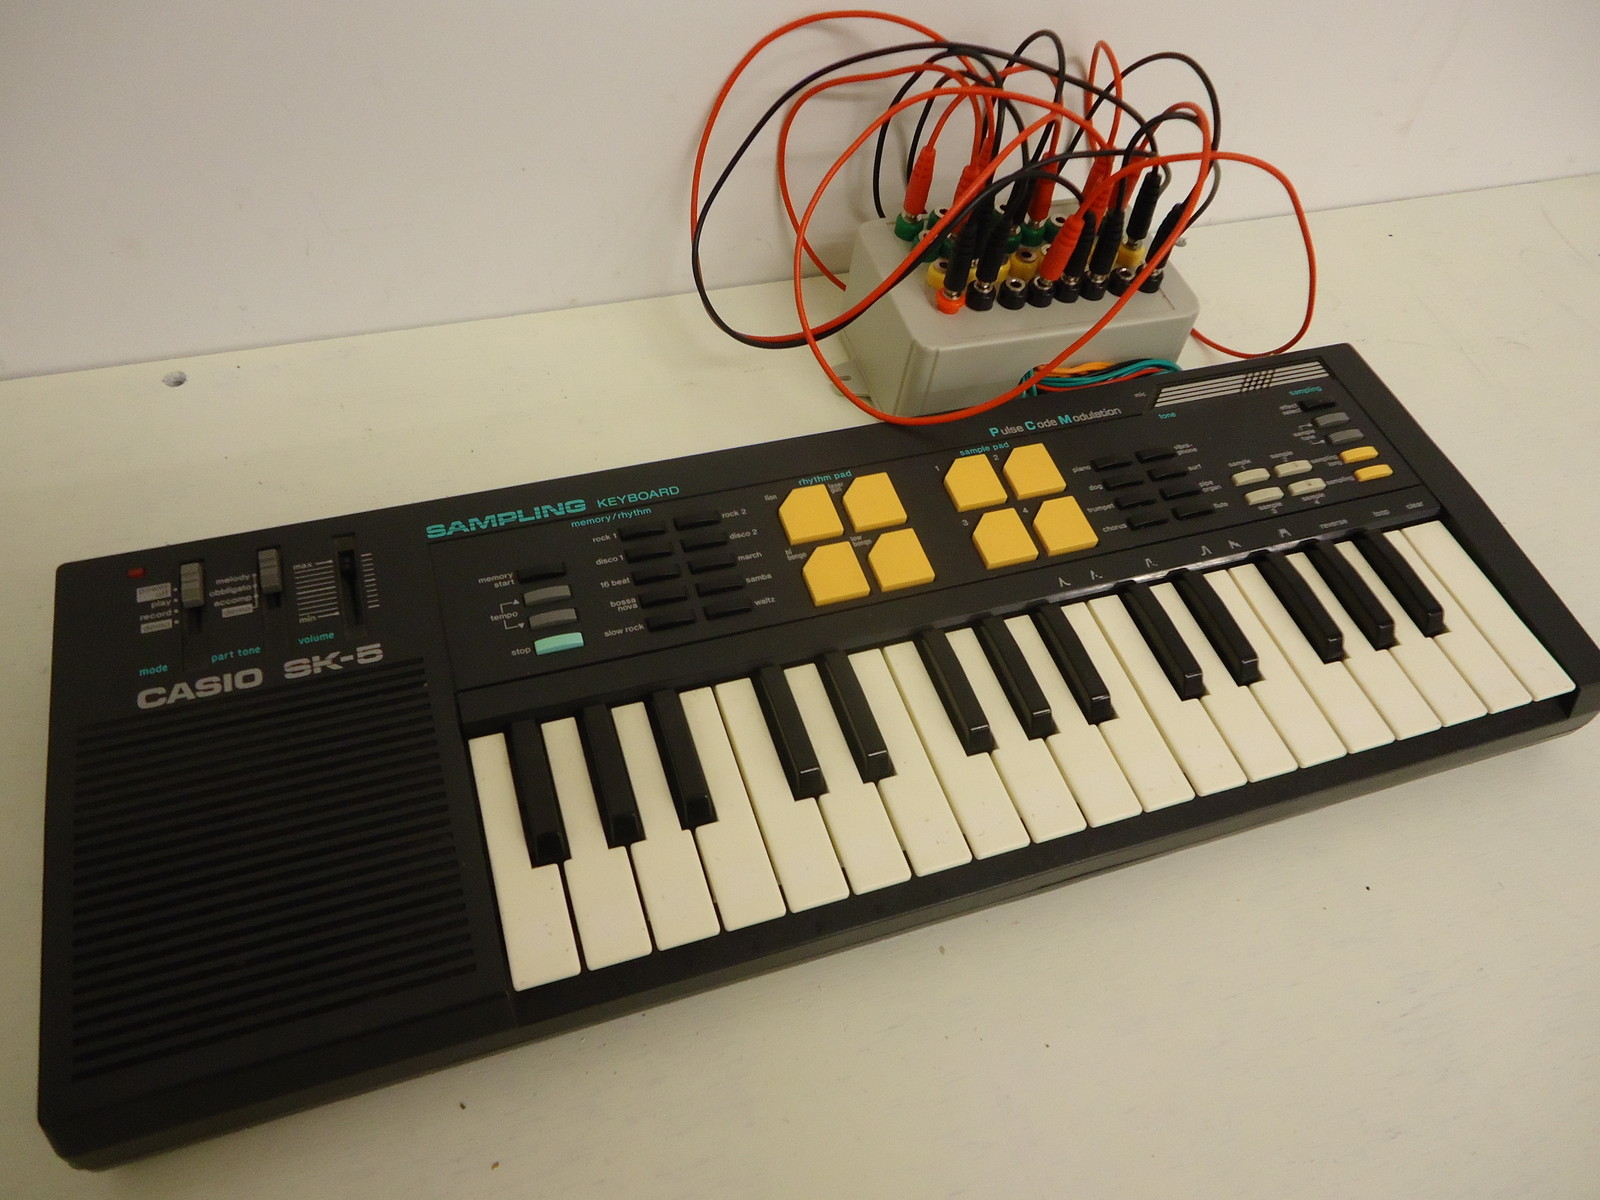 matrixsynth-circuit-bent-casio-sk-5-sampling-keyboard